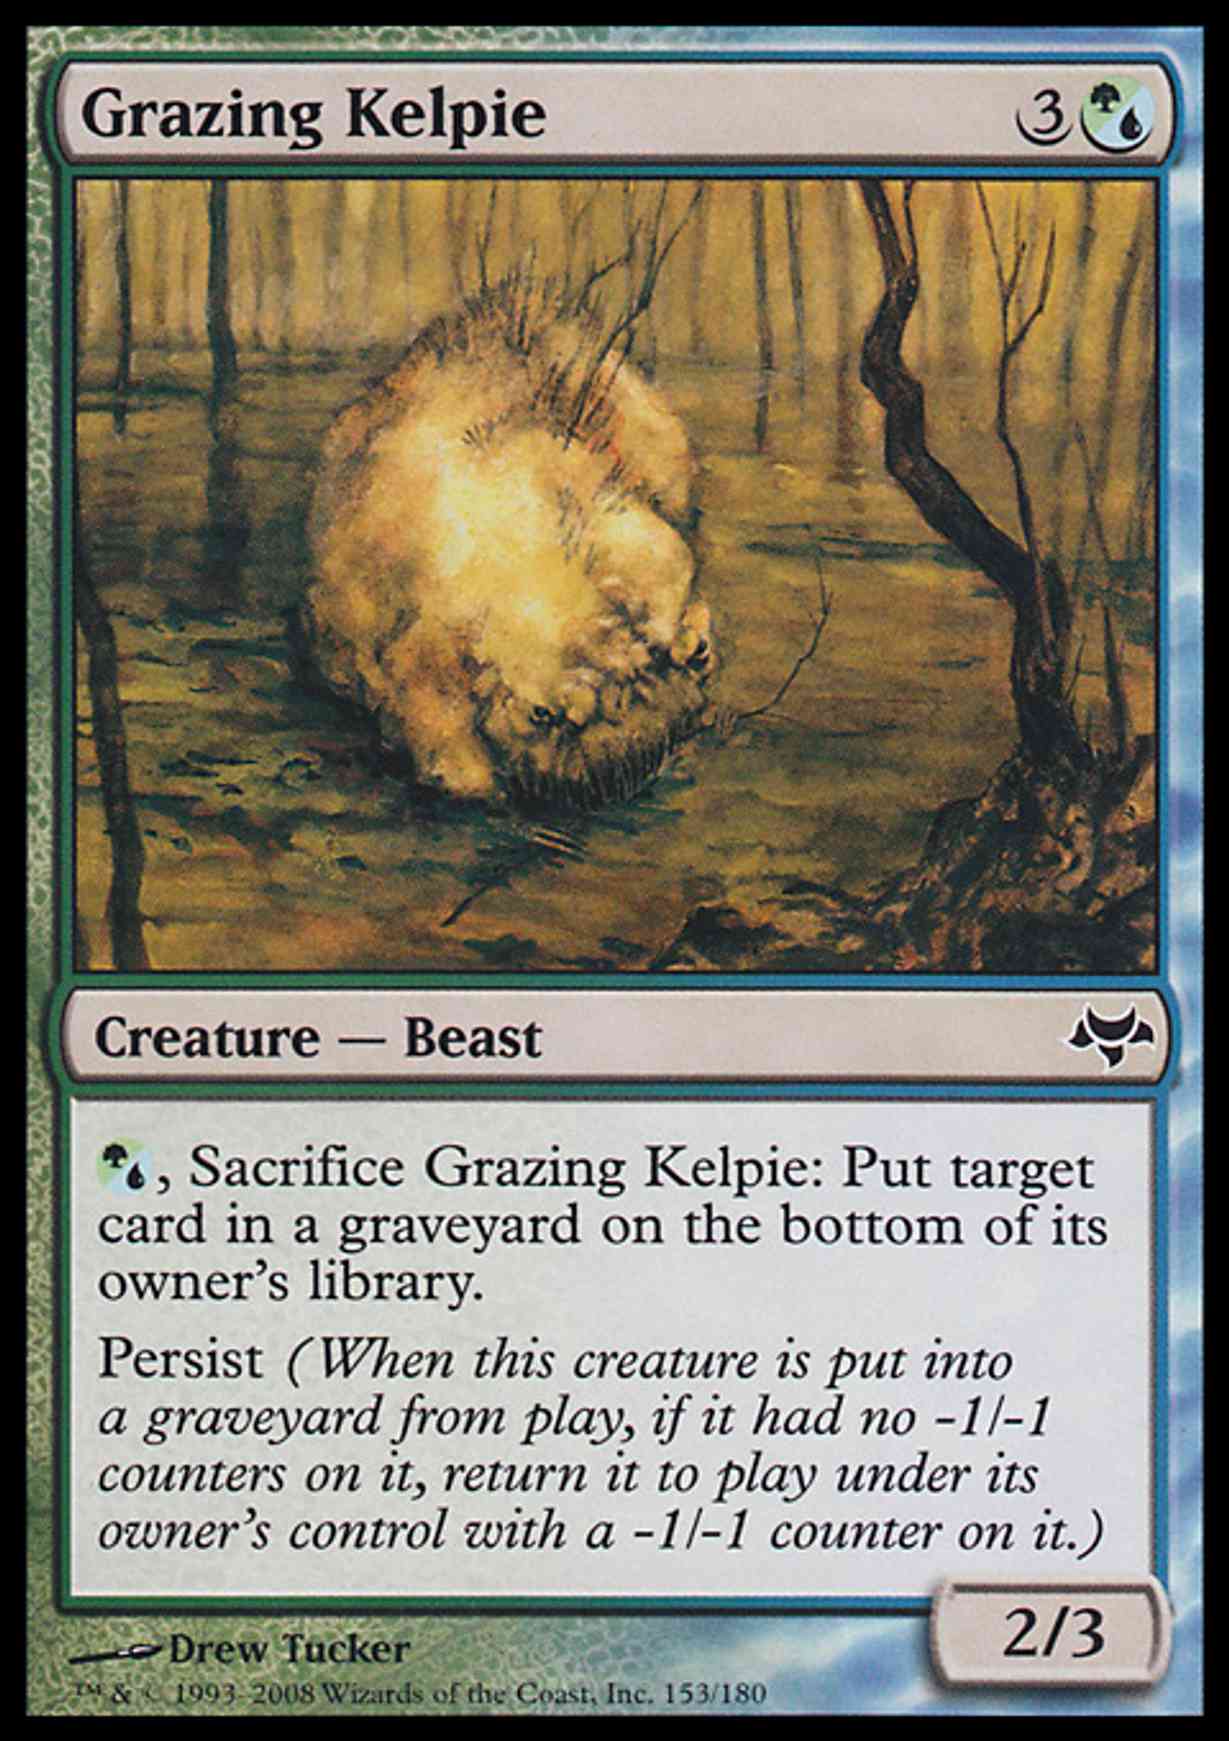 Grazing Kelpie magic card front